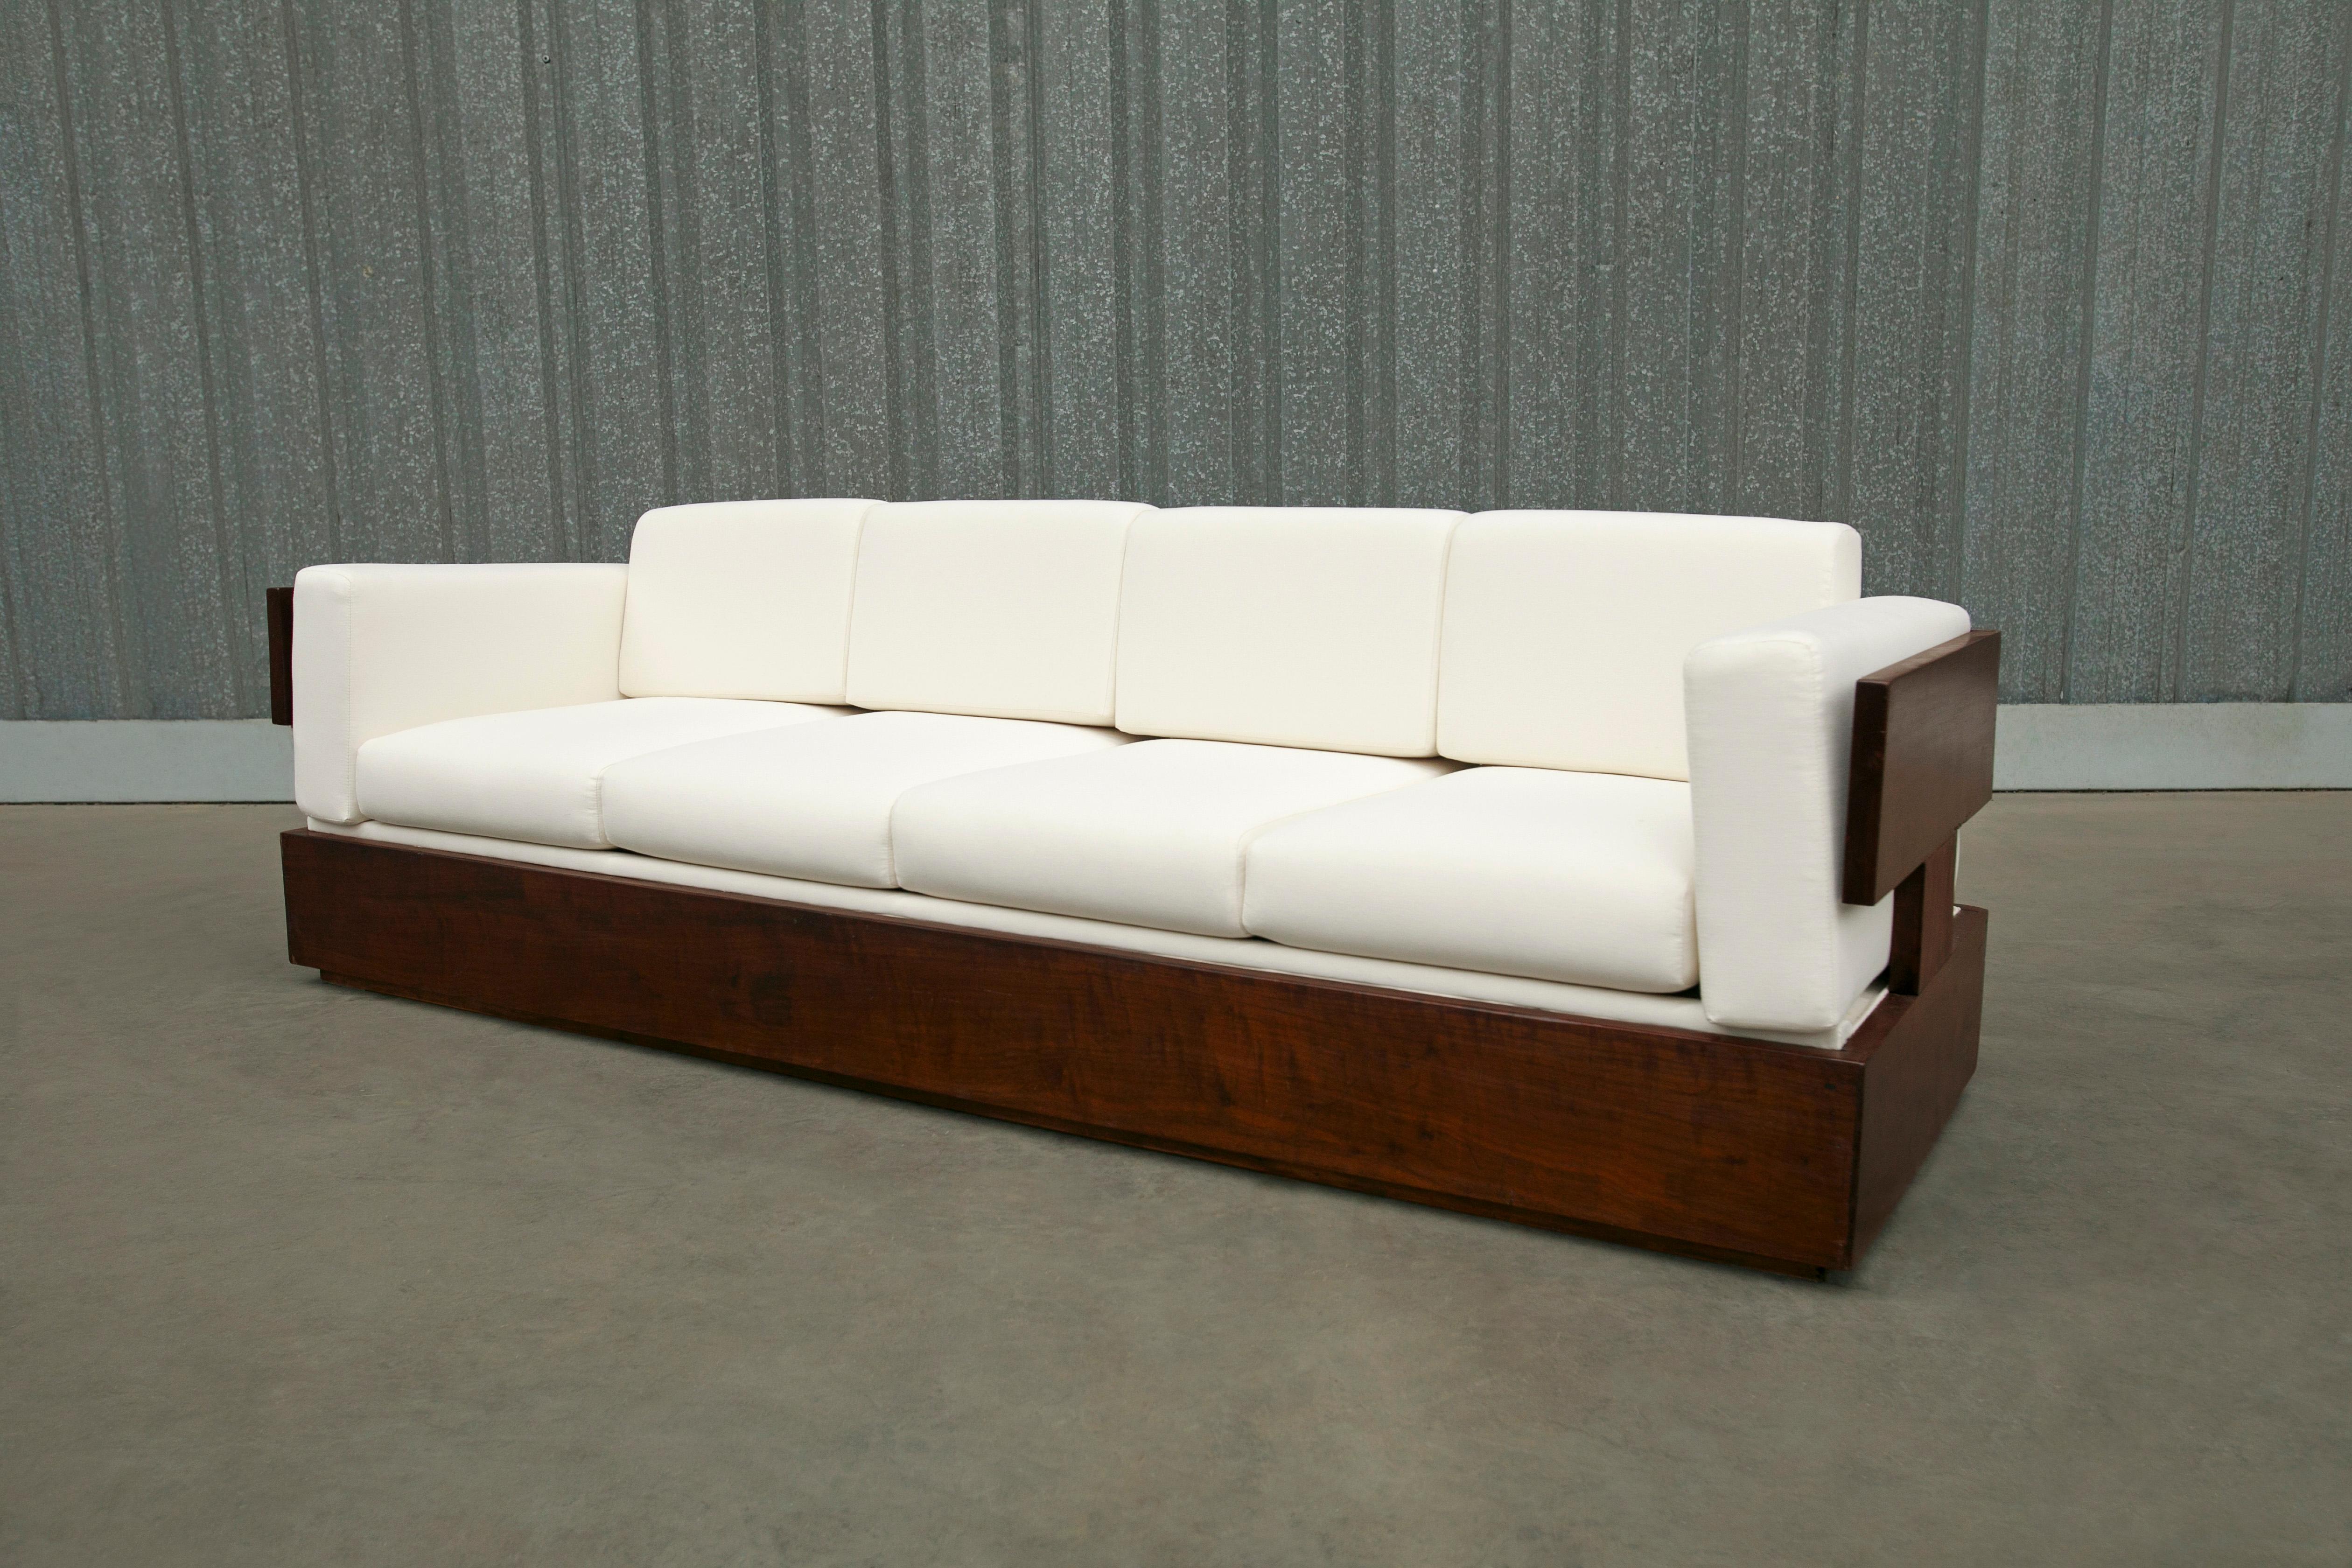 Brazilian Modern Sofa in Hardwood and White Linen by Celina, Brazil, c. 1960 For Sale 1